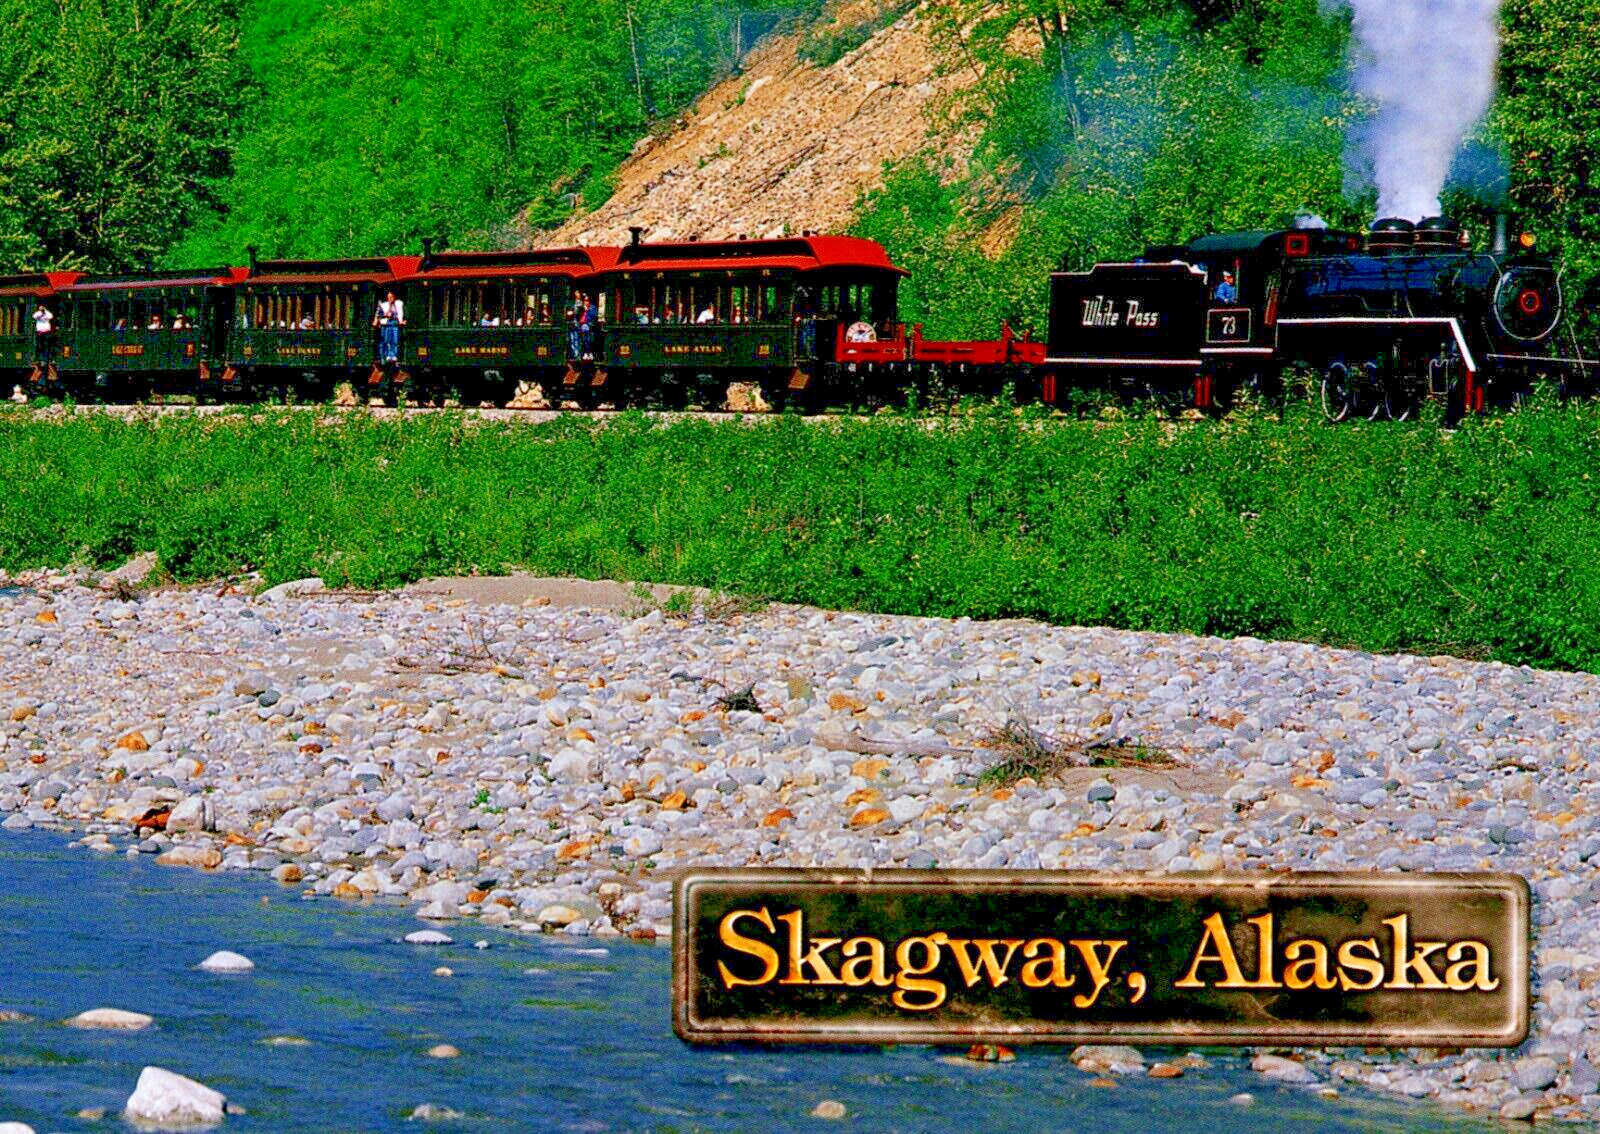 White Pass Yukon Railroad Engine Number 73 Skagway Alaska 6x4 Postcard CP327